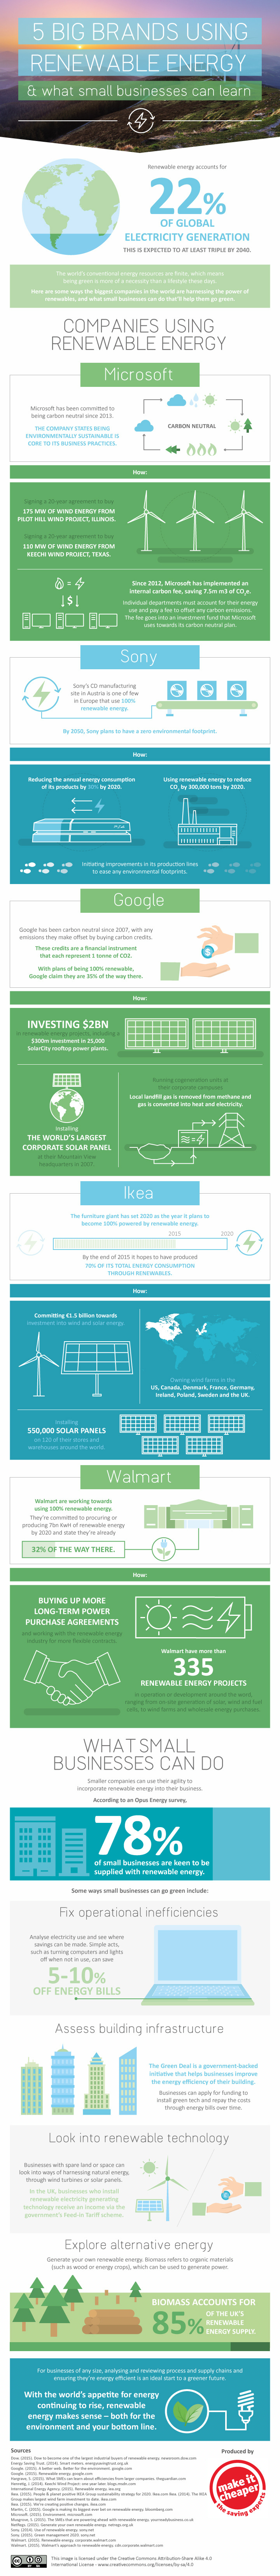 brands using renewable energy infographic